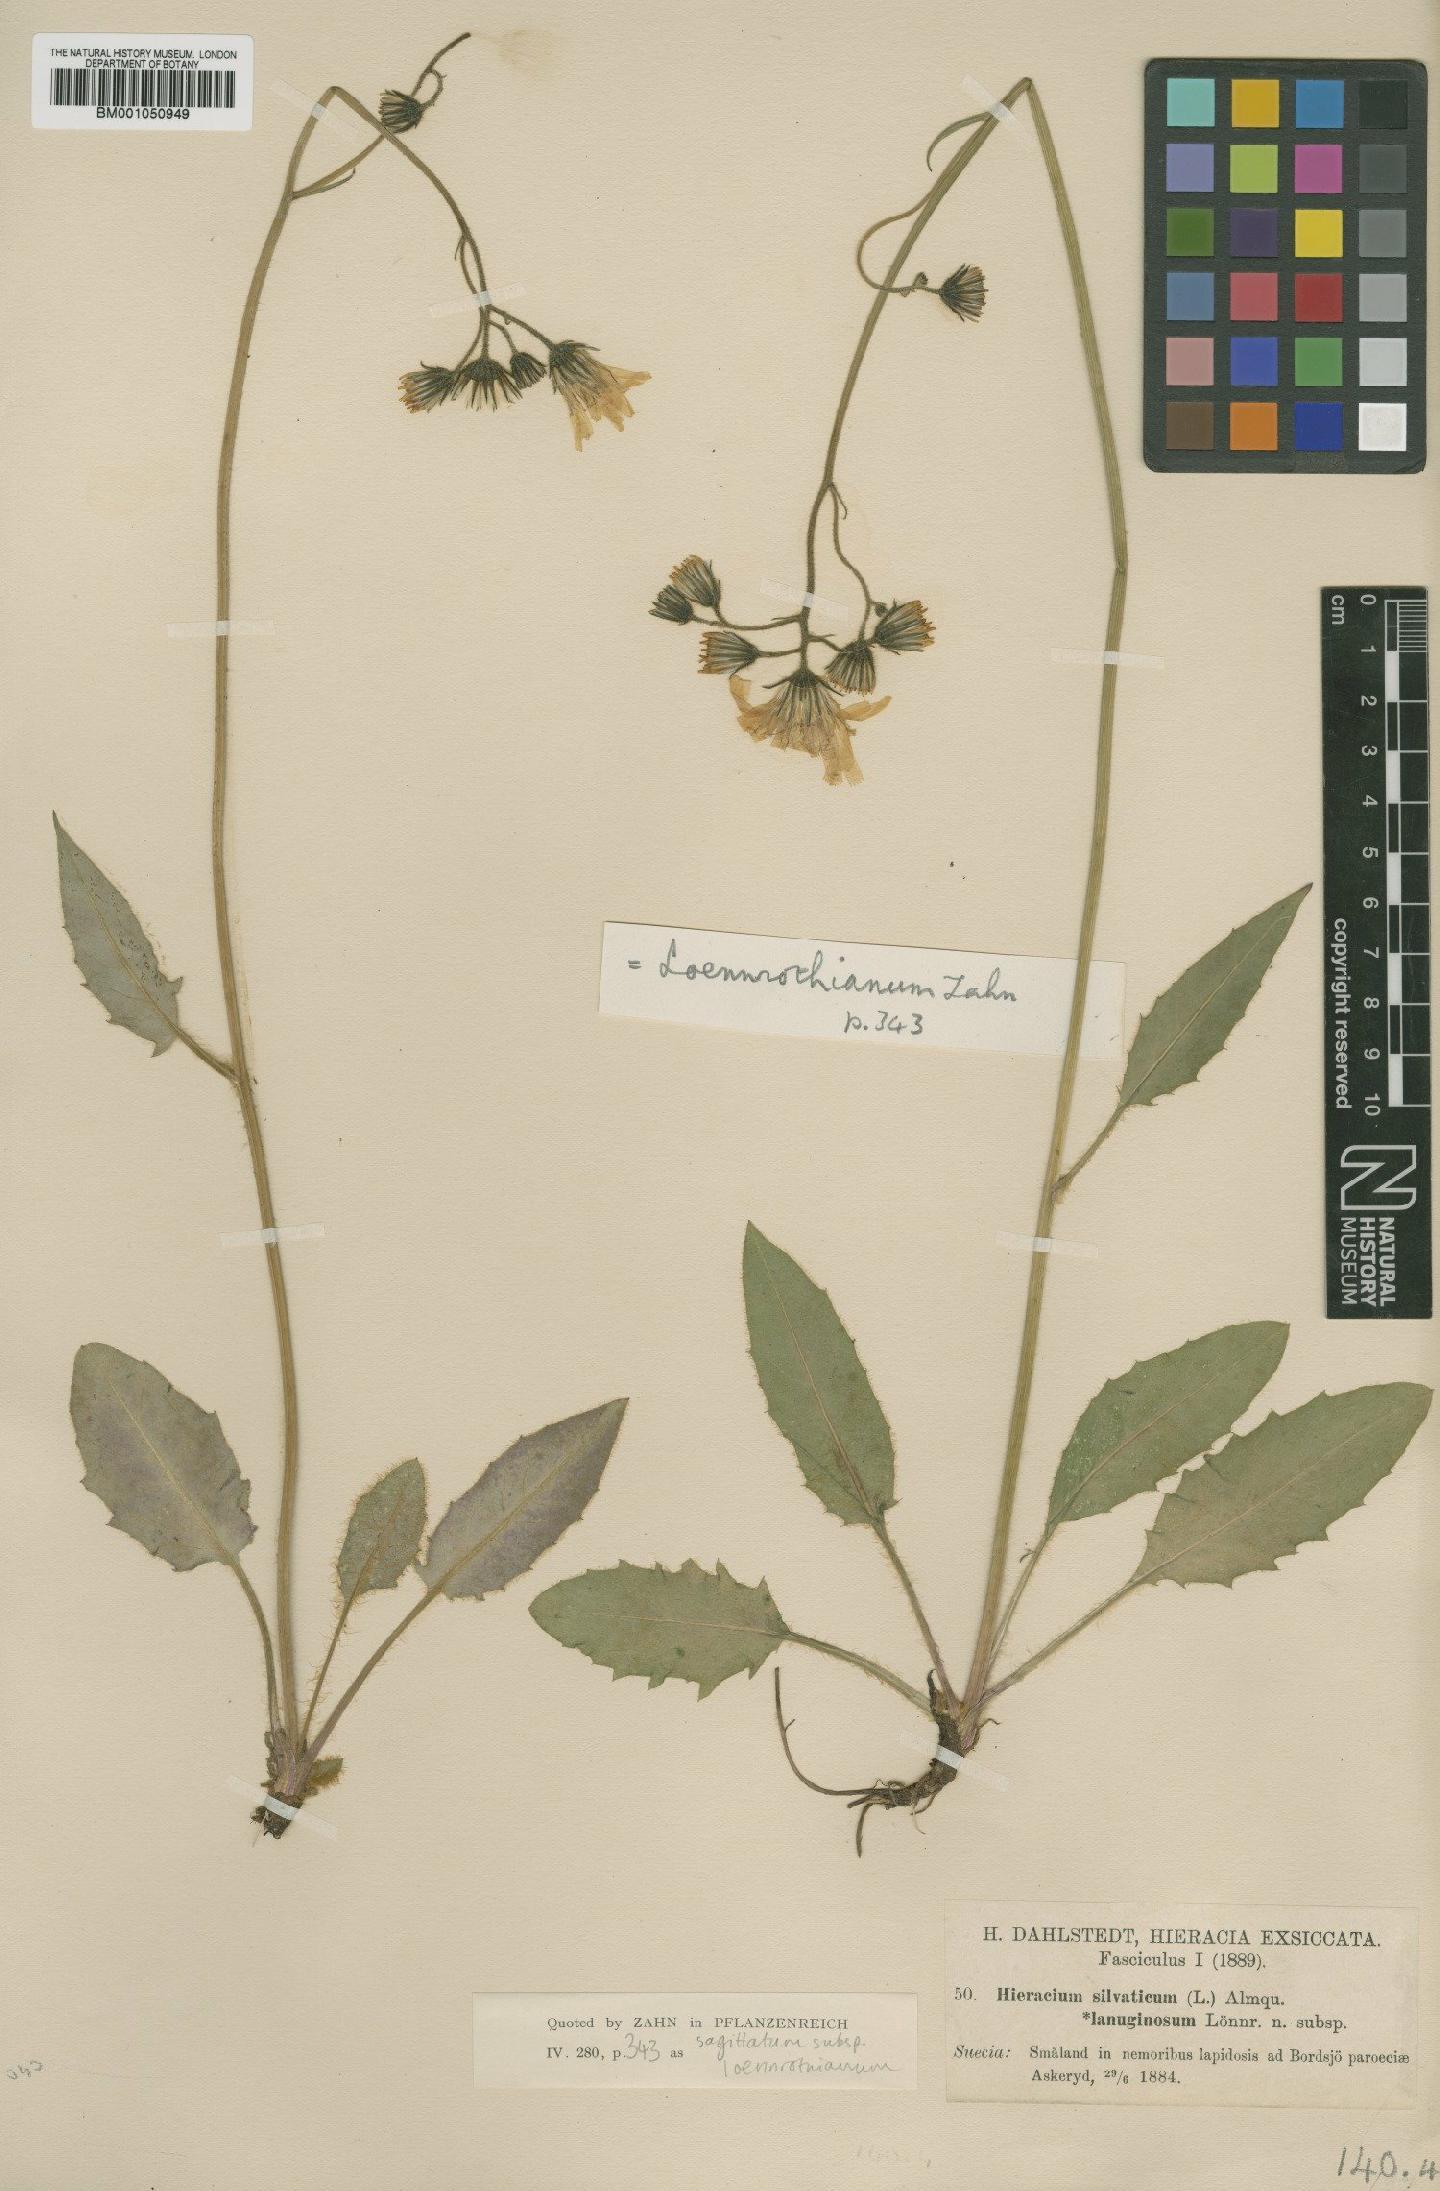 To NHMUK collection (Hieracium sagittatum subsp. loennrothianum Zahn; TYPE; NHMUK:ecatalogue:2413687)